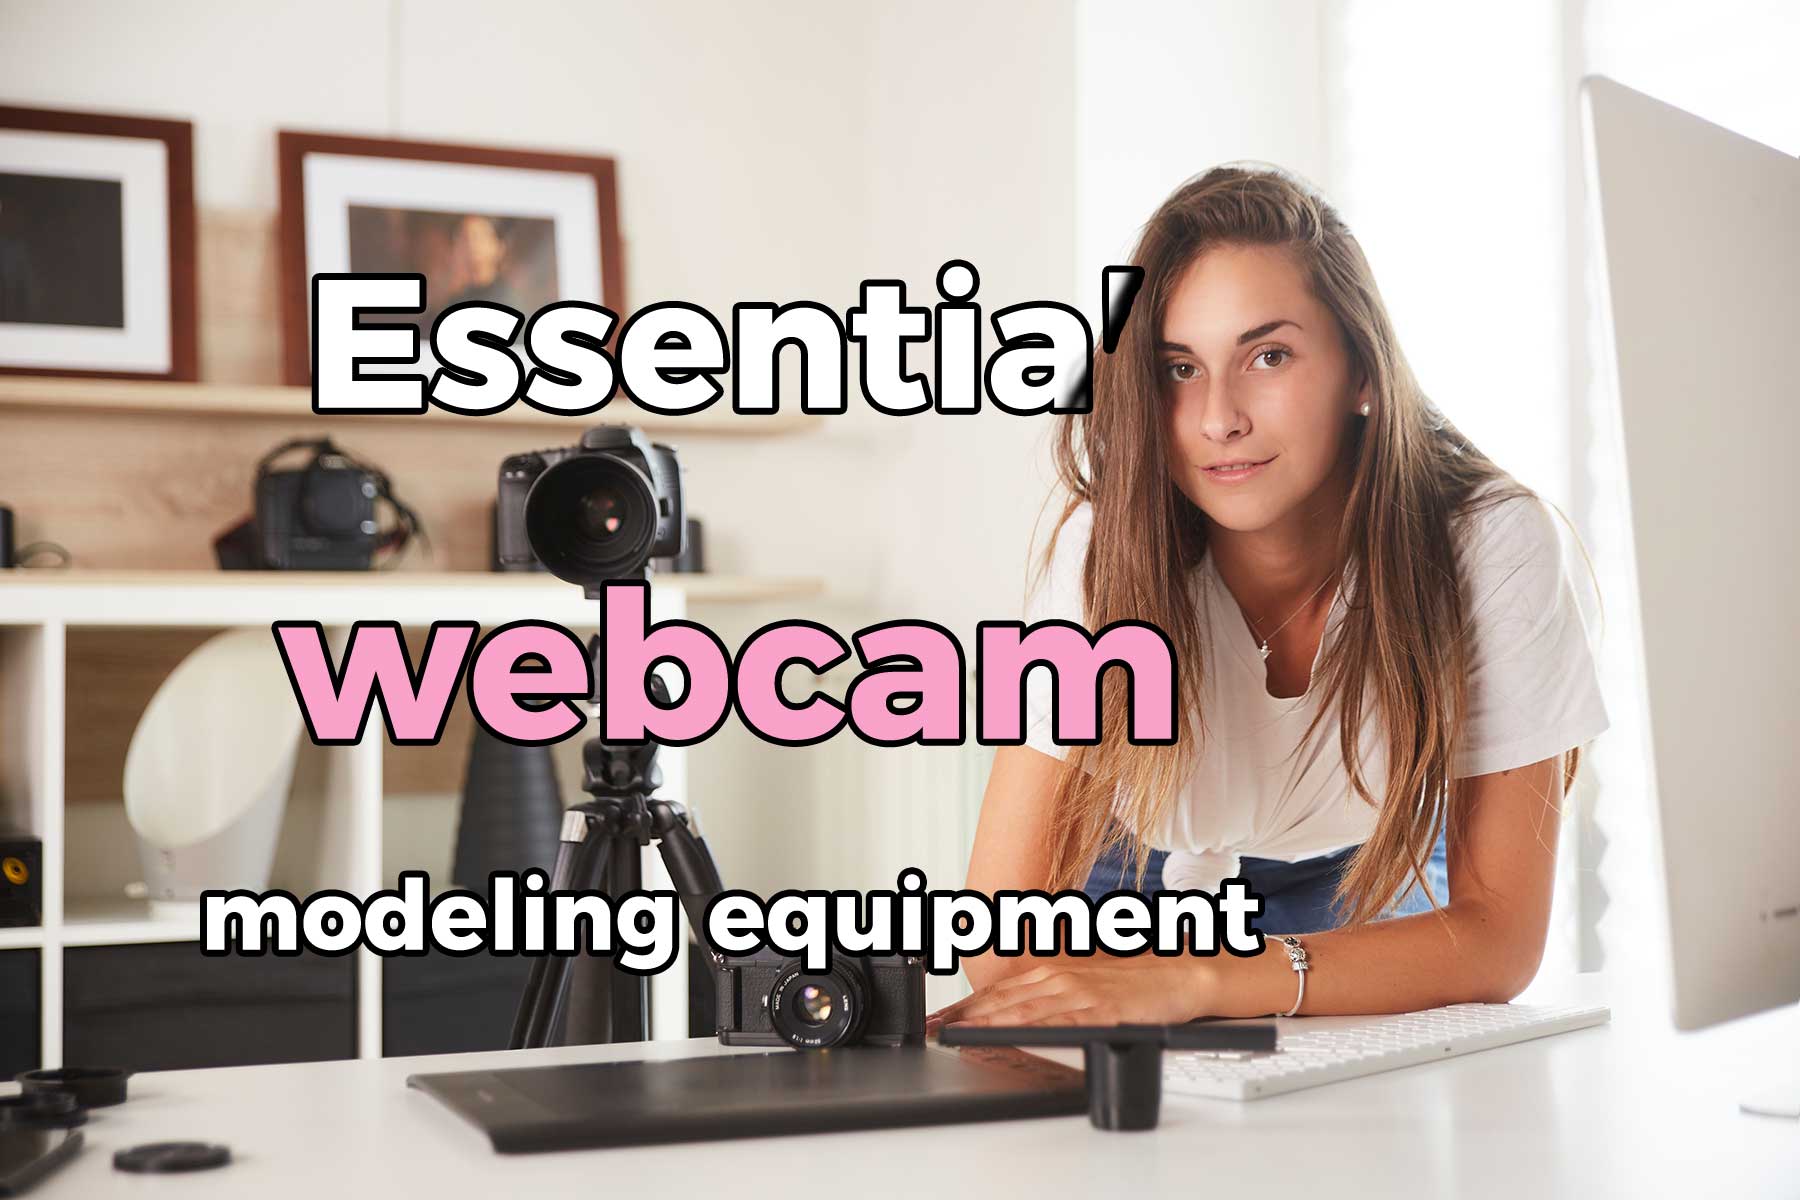 Essential webcam modeling equipment